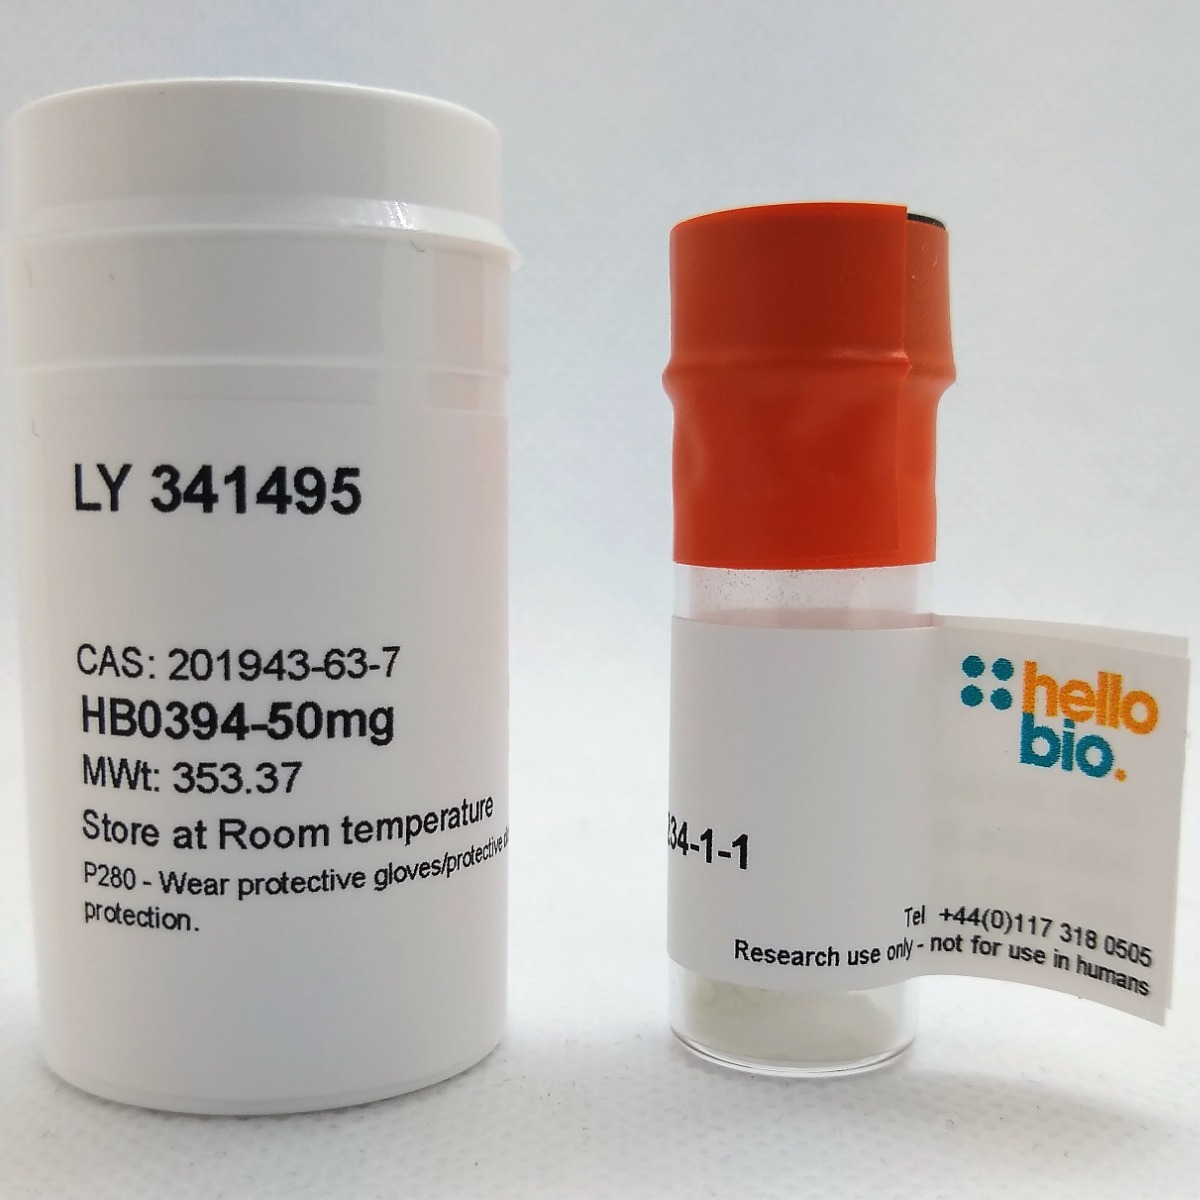 LY 341495 product vial image | Hello Bio